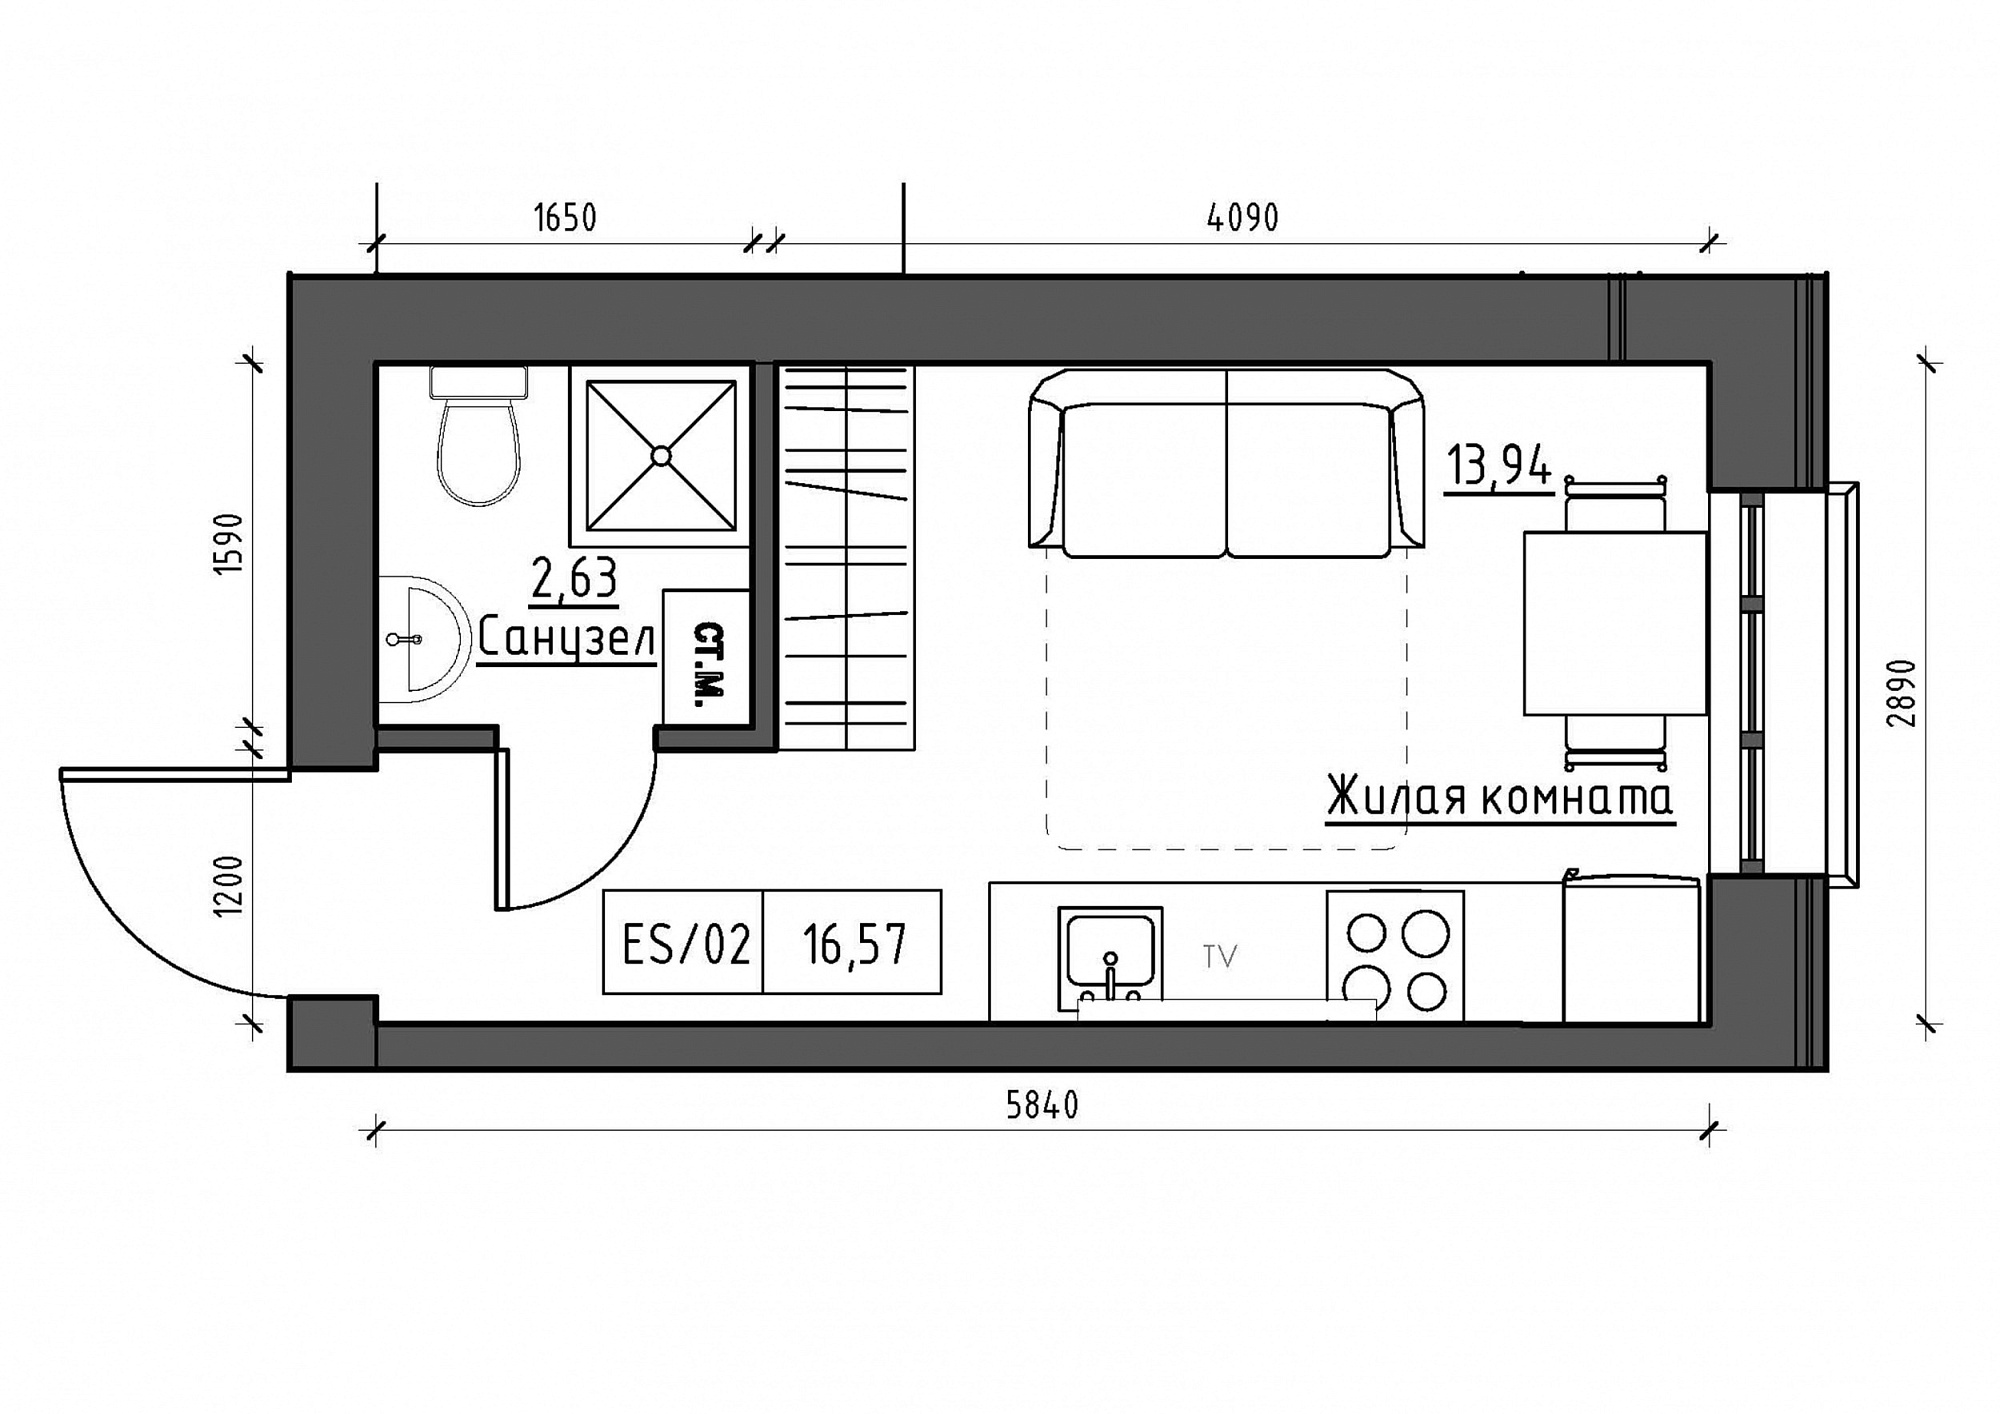 Planning Smart flats area 16.57m2, KS-011-02/0005.